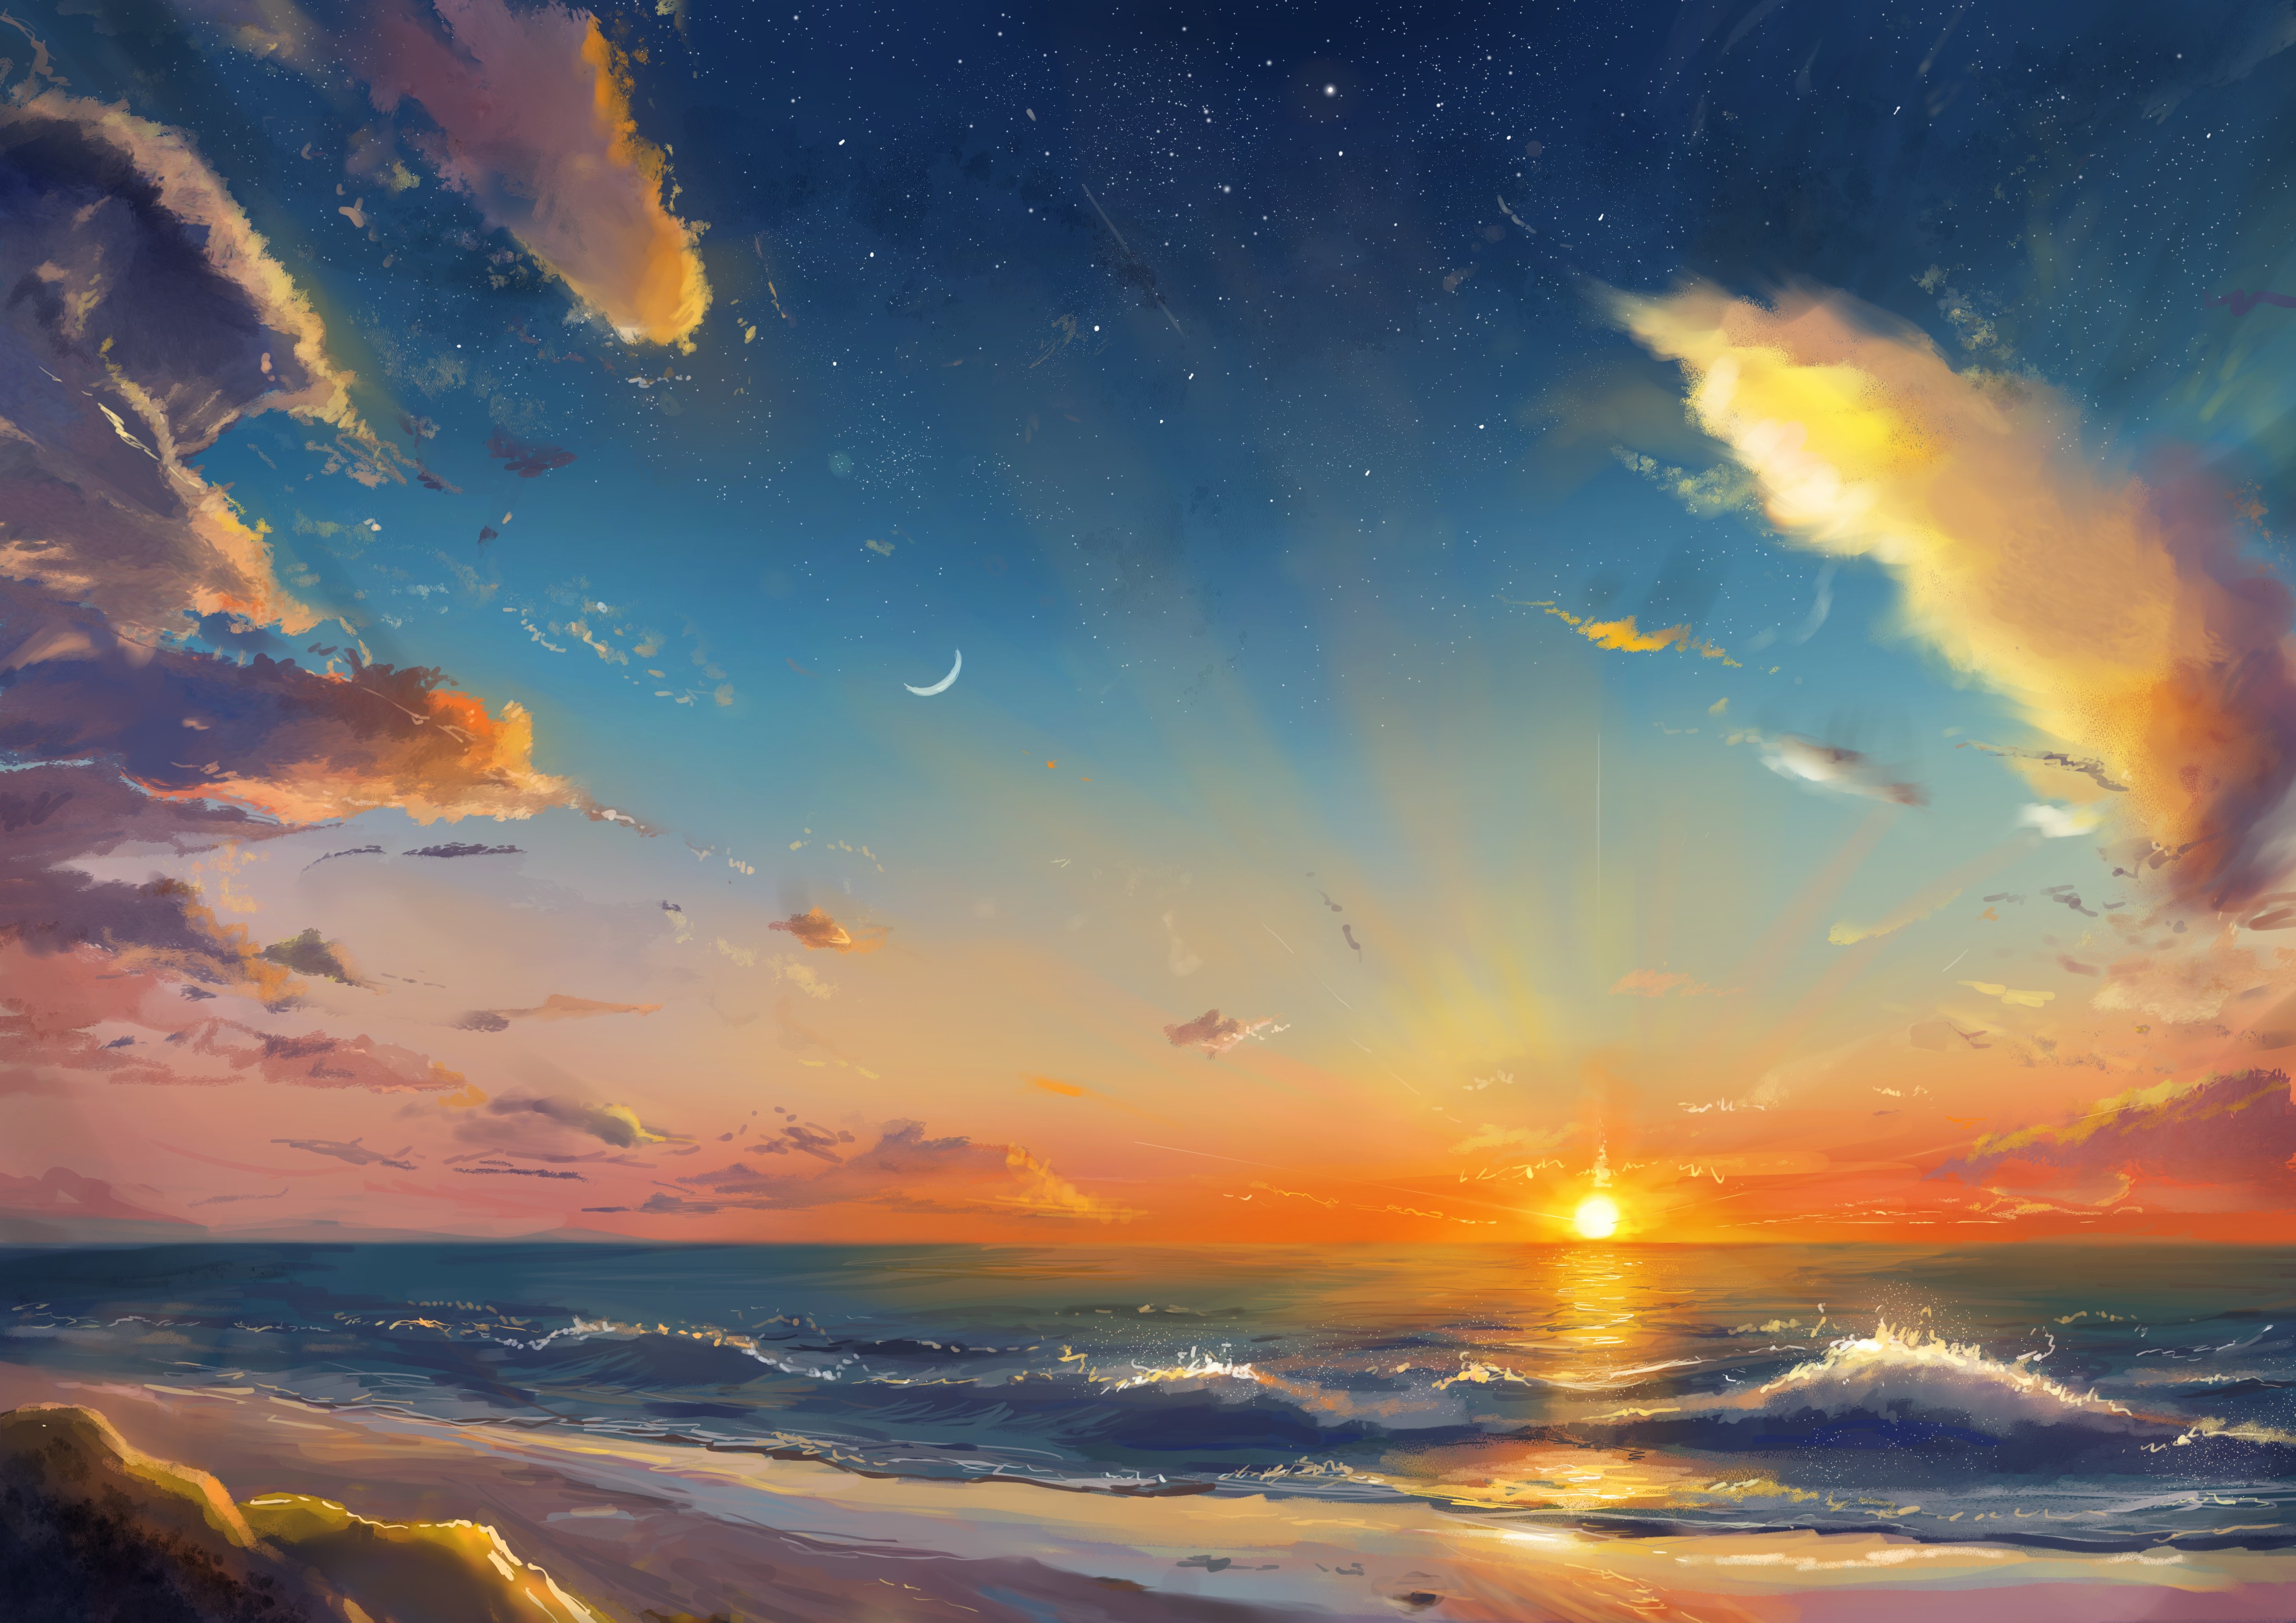 General 4093x2894 digital art artwork illustration digital painting landscape beach sea water sunlight Moon sky clouds sunset nature Sun waves stars